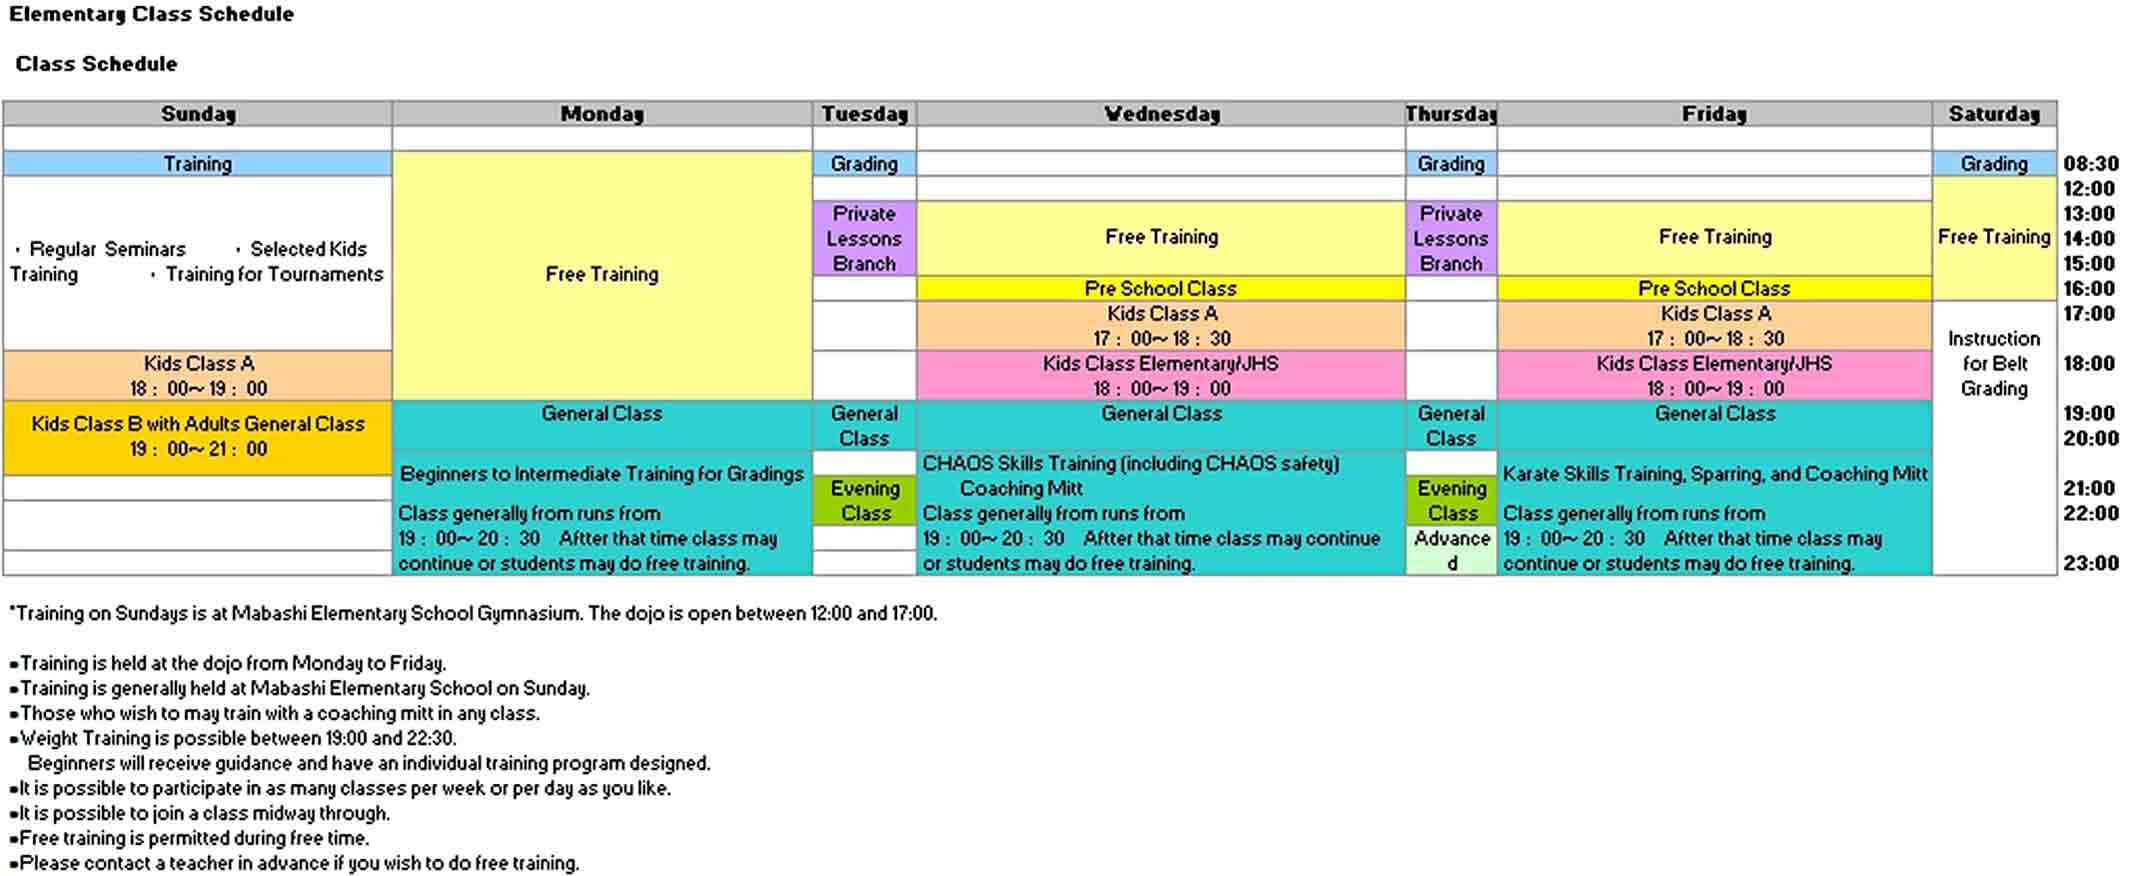 Elementary Class Schedule Template